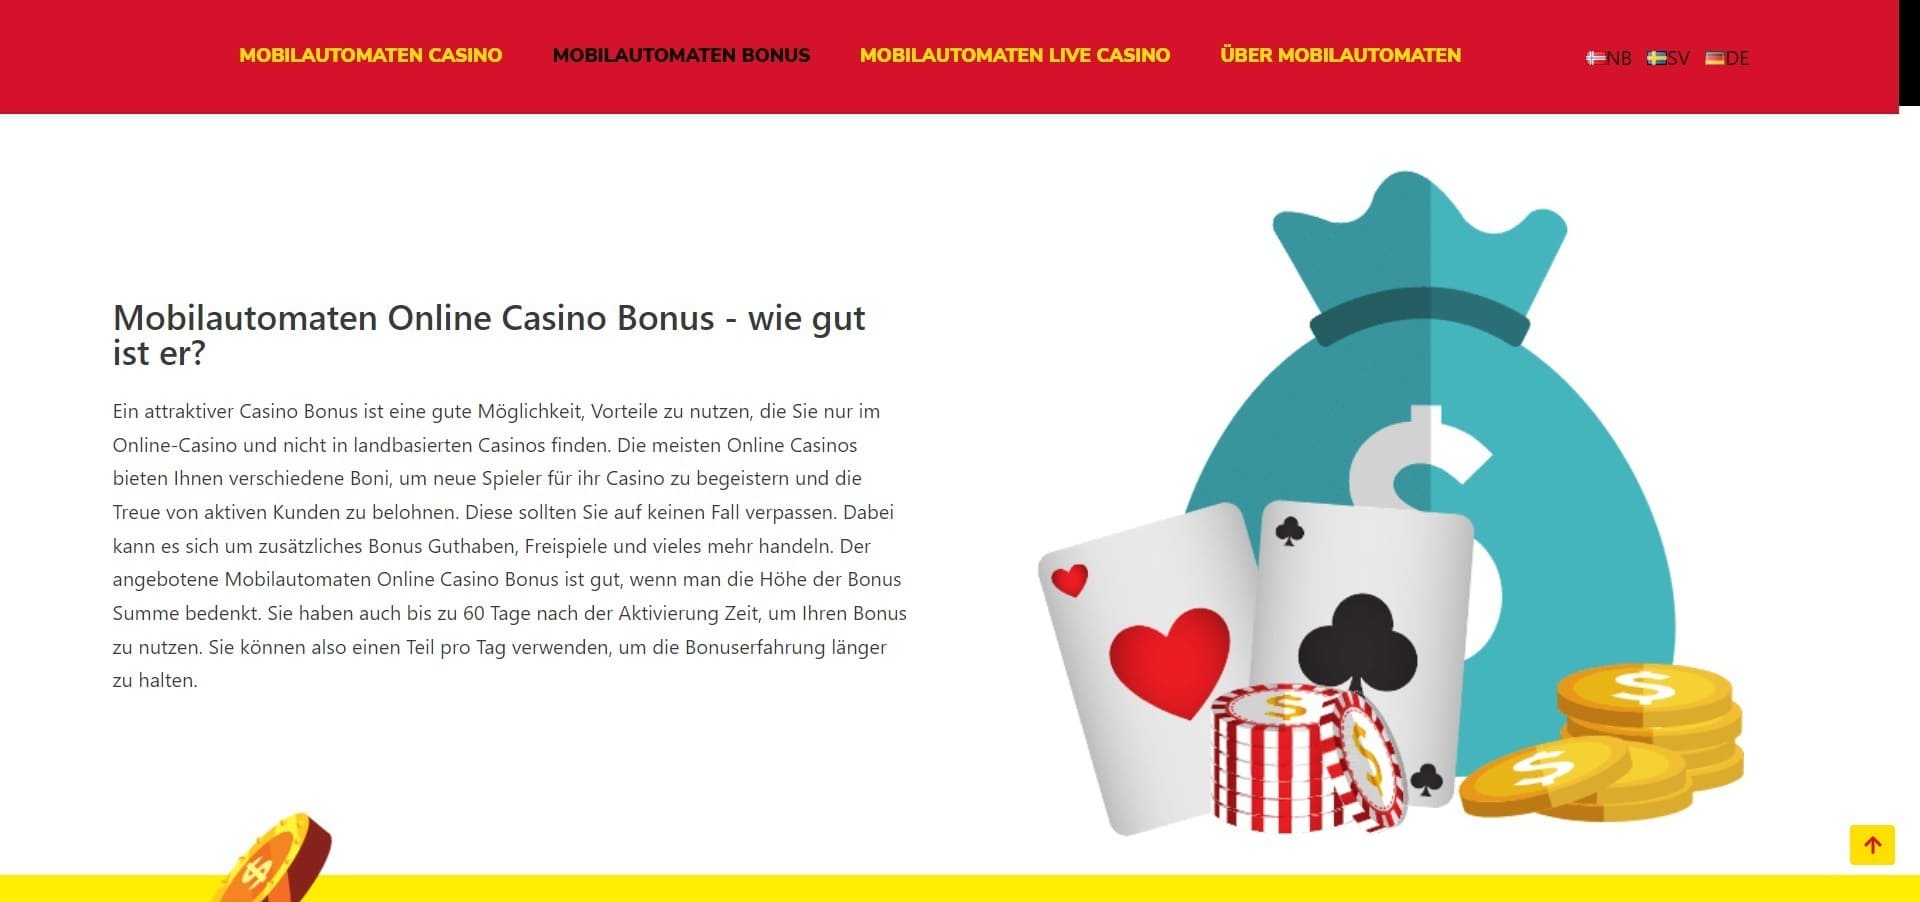 Mobilautomaten Casino Boni